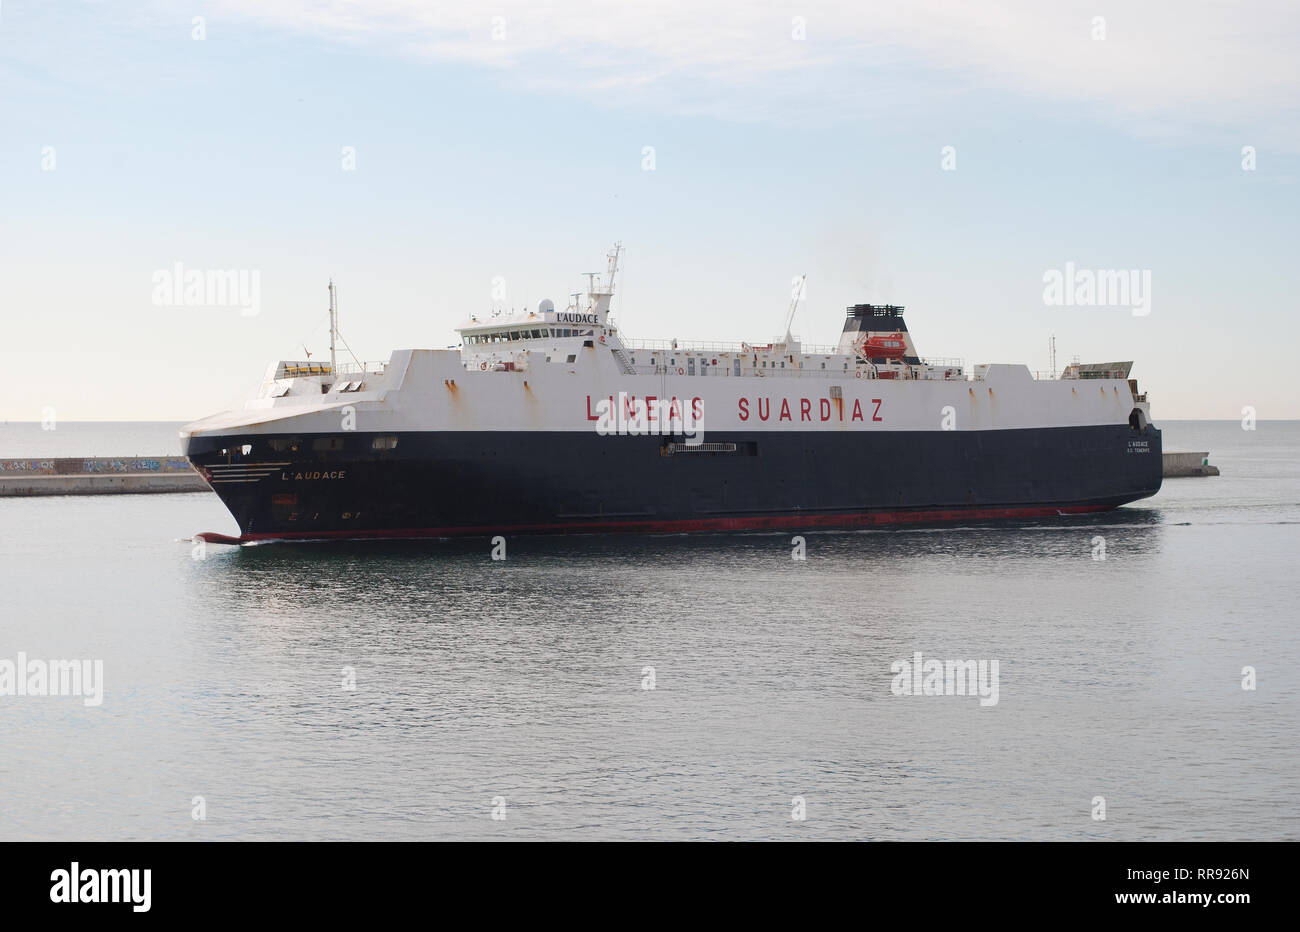 Merchant ship L'Audace entering the port of Barcelona. Stock Photo